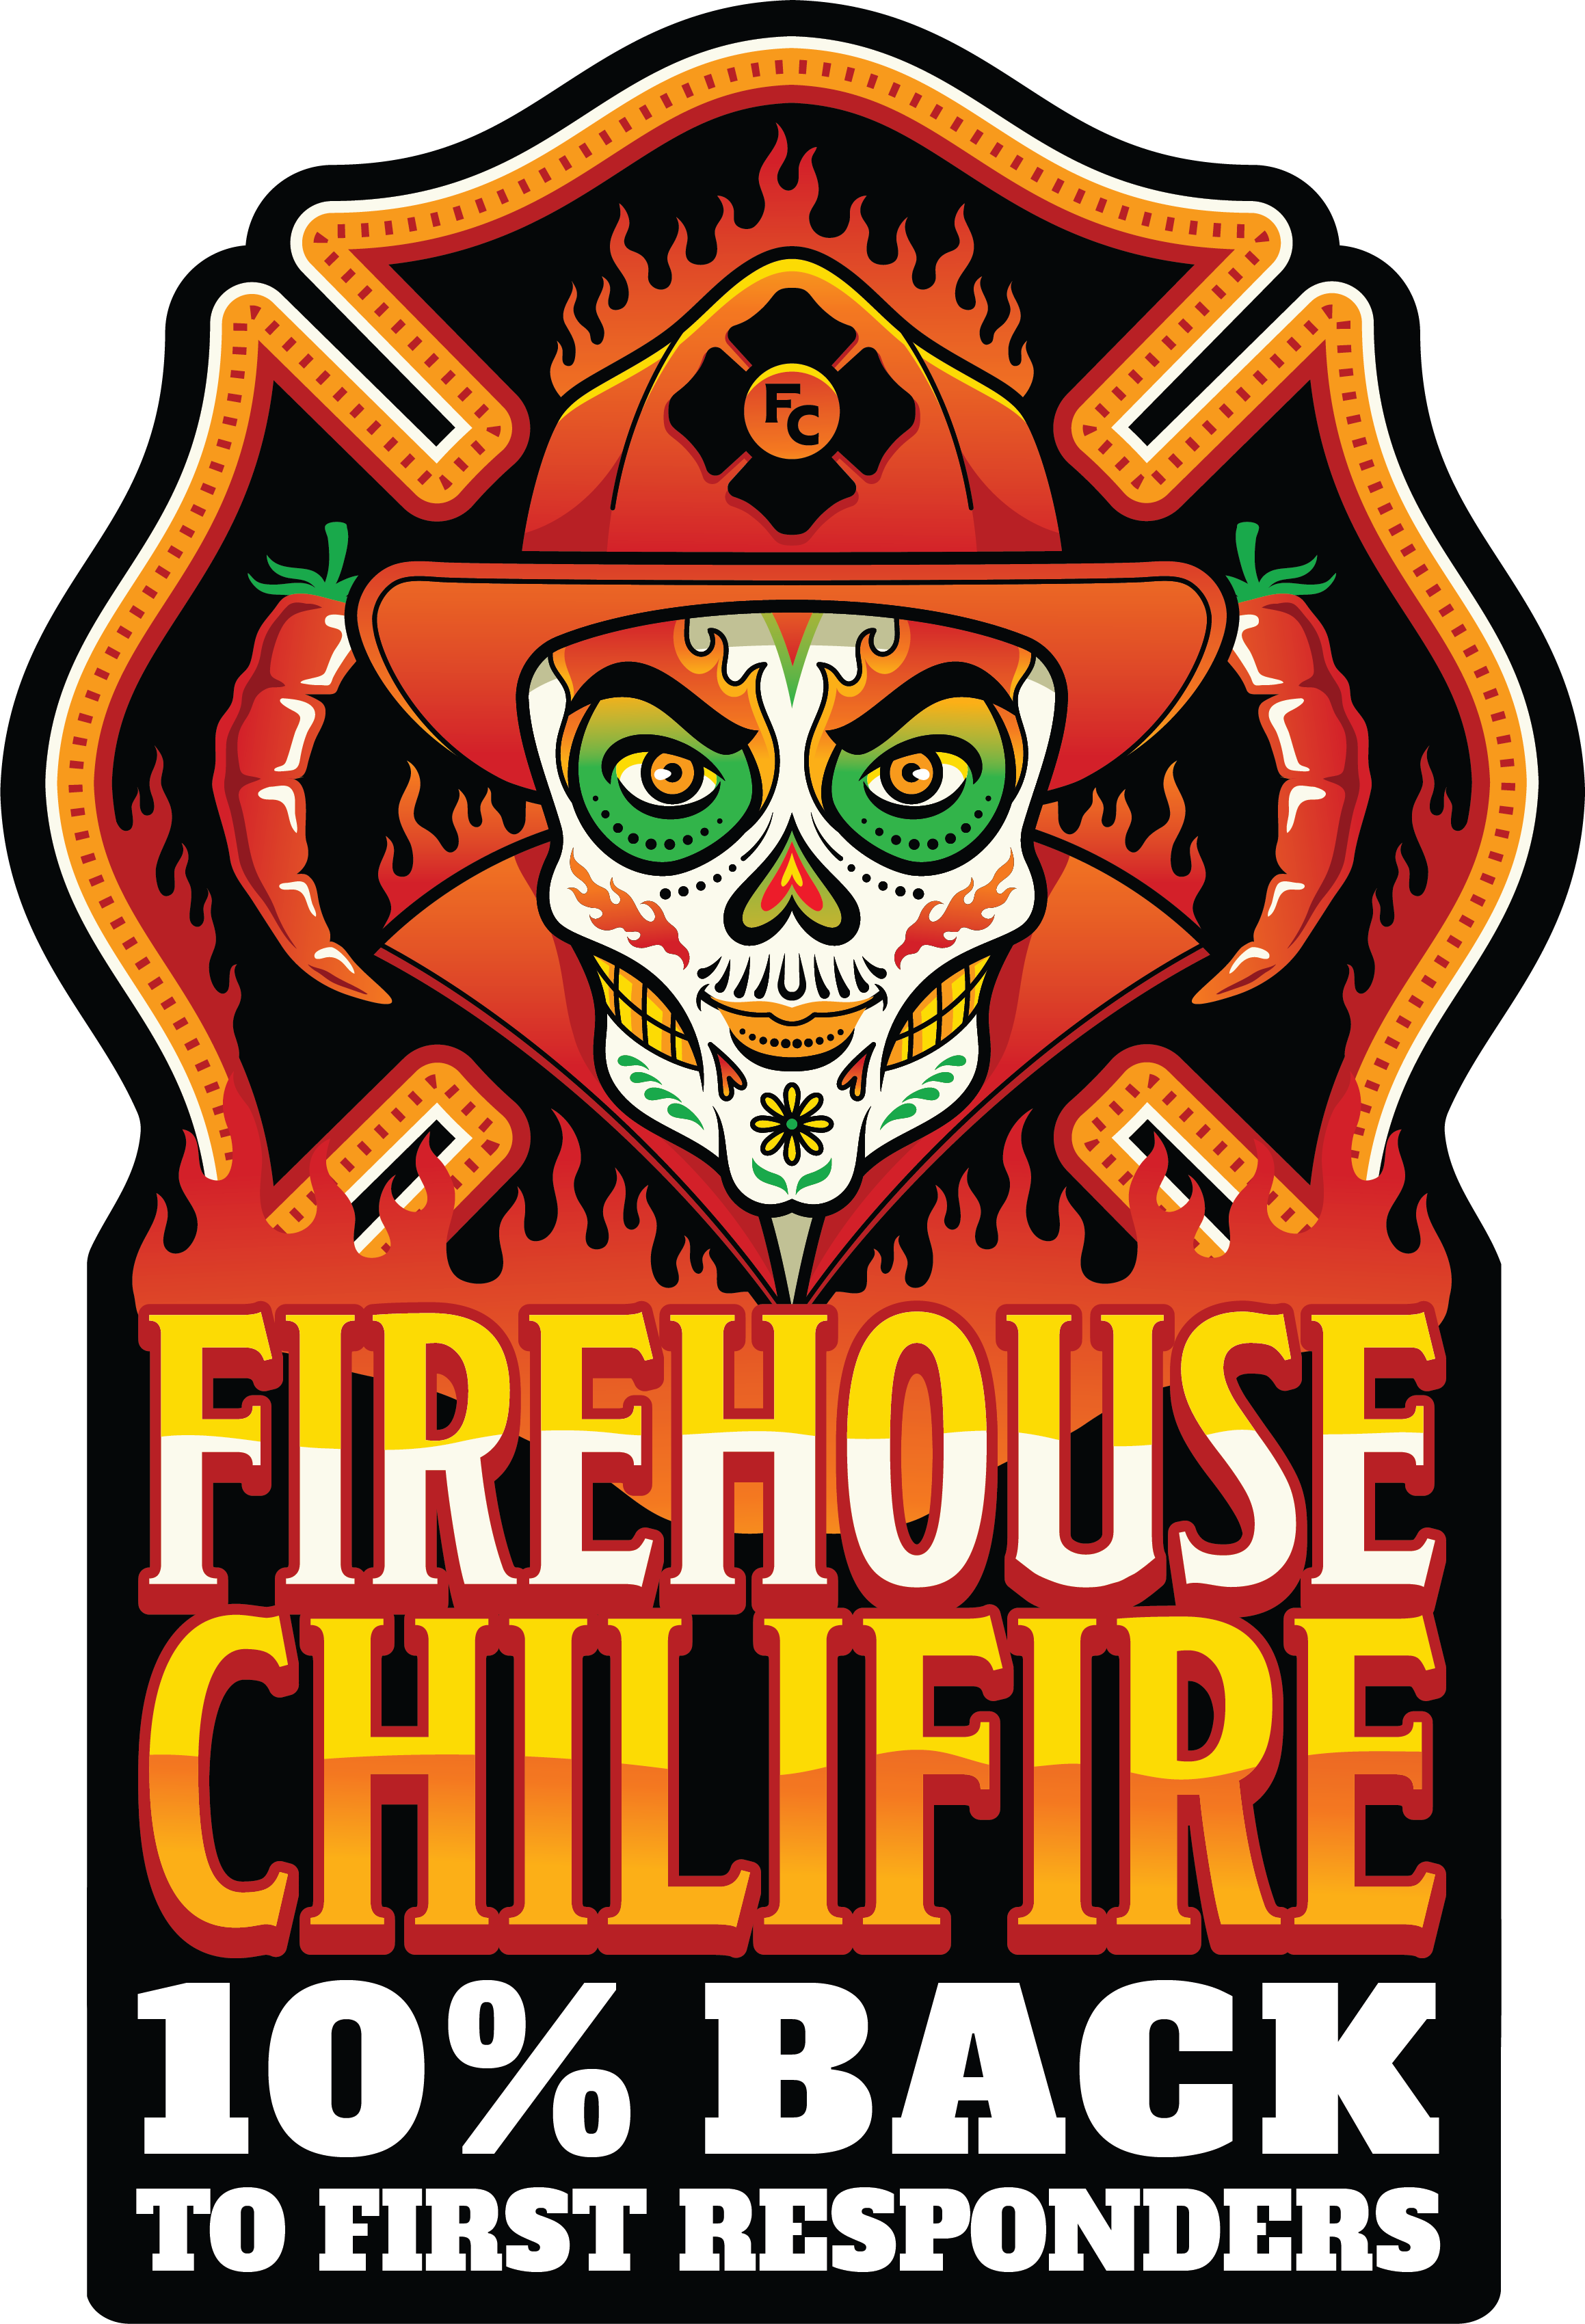 Firehouse Chilifire logo 